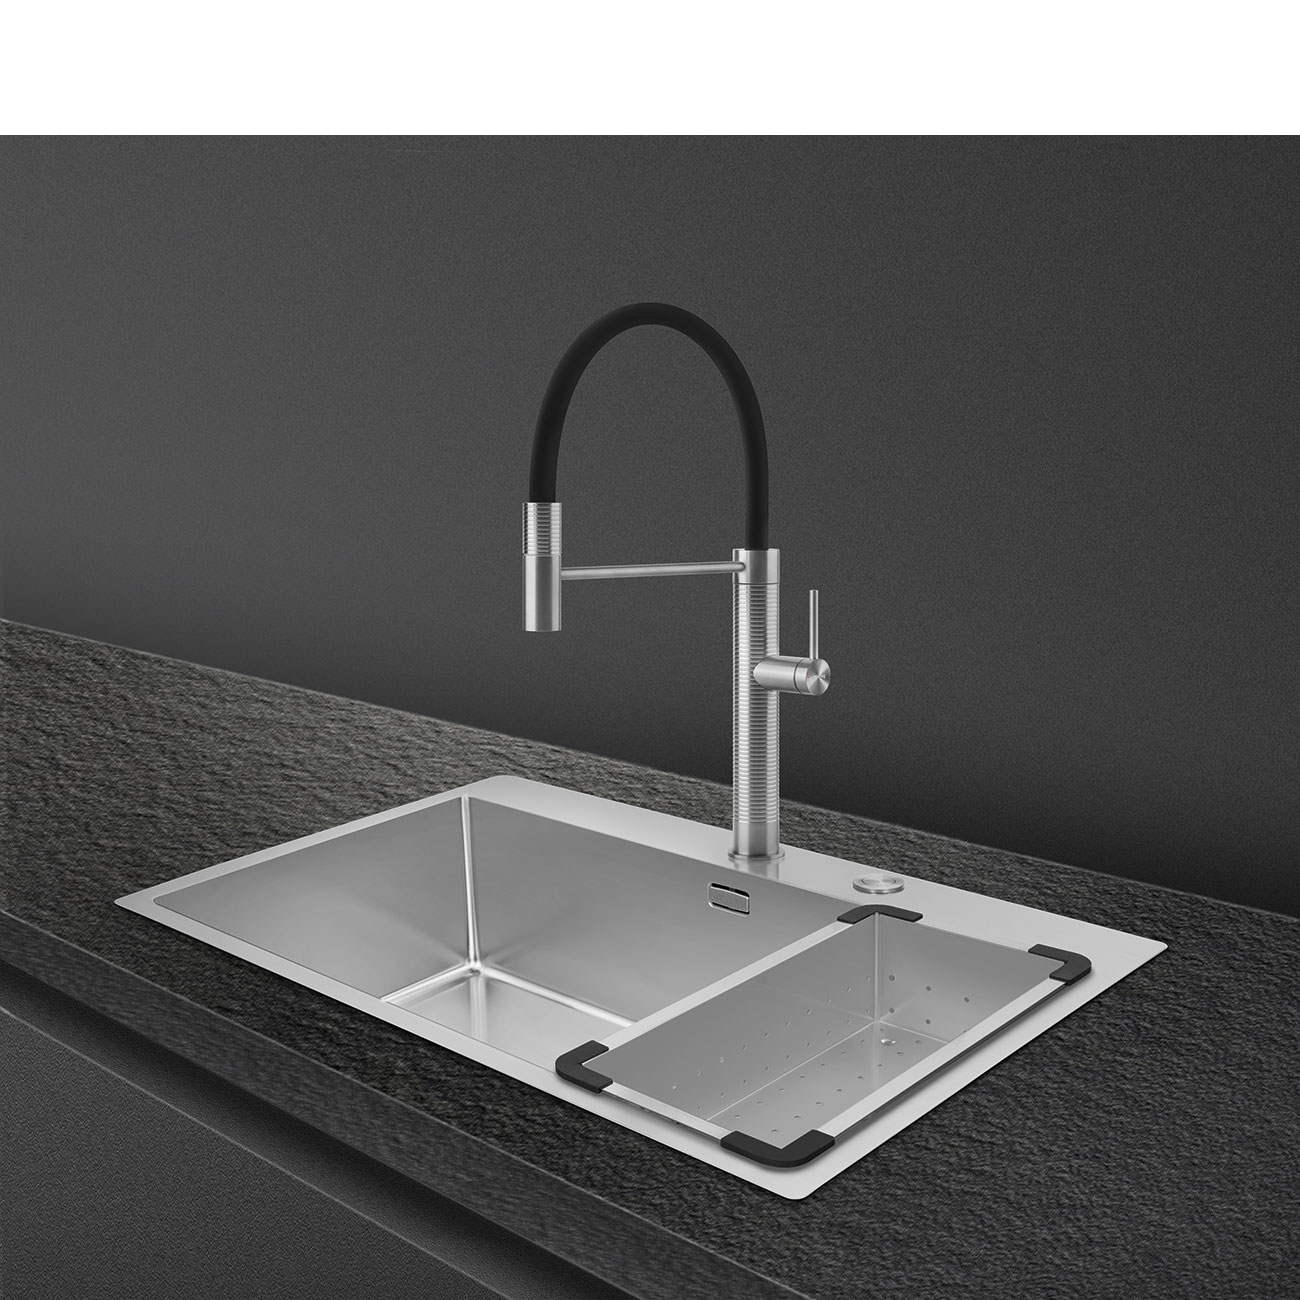 Semi-professional single lever kitchen tap - Smeg_4